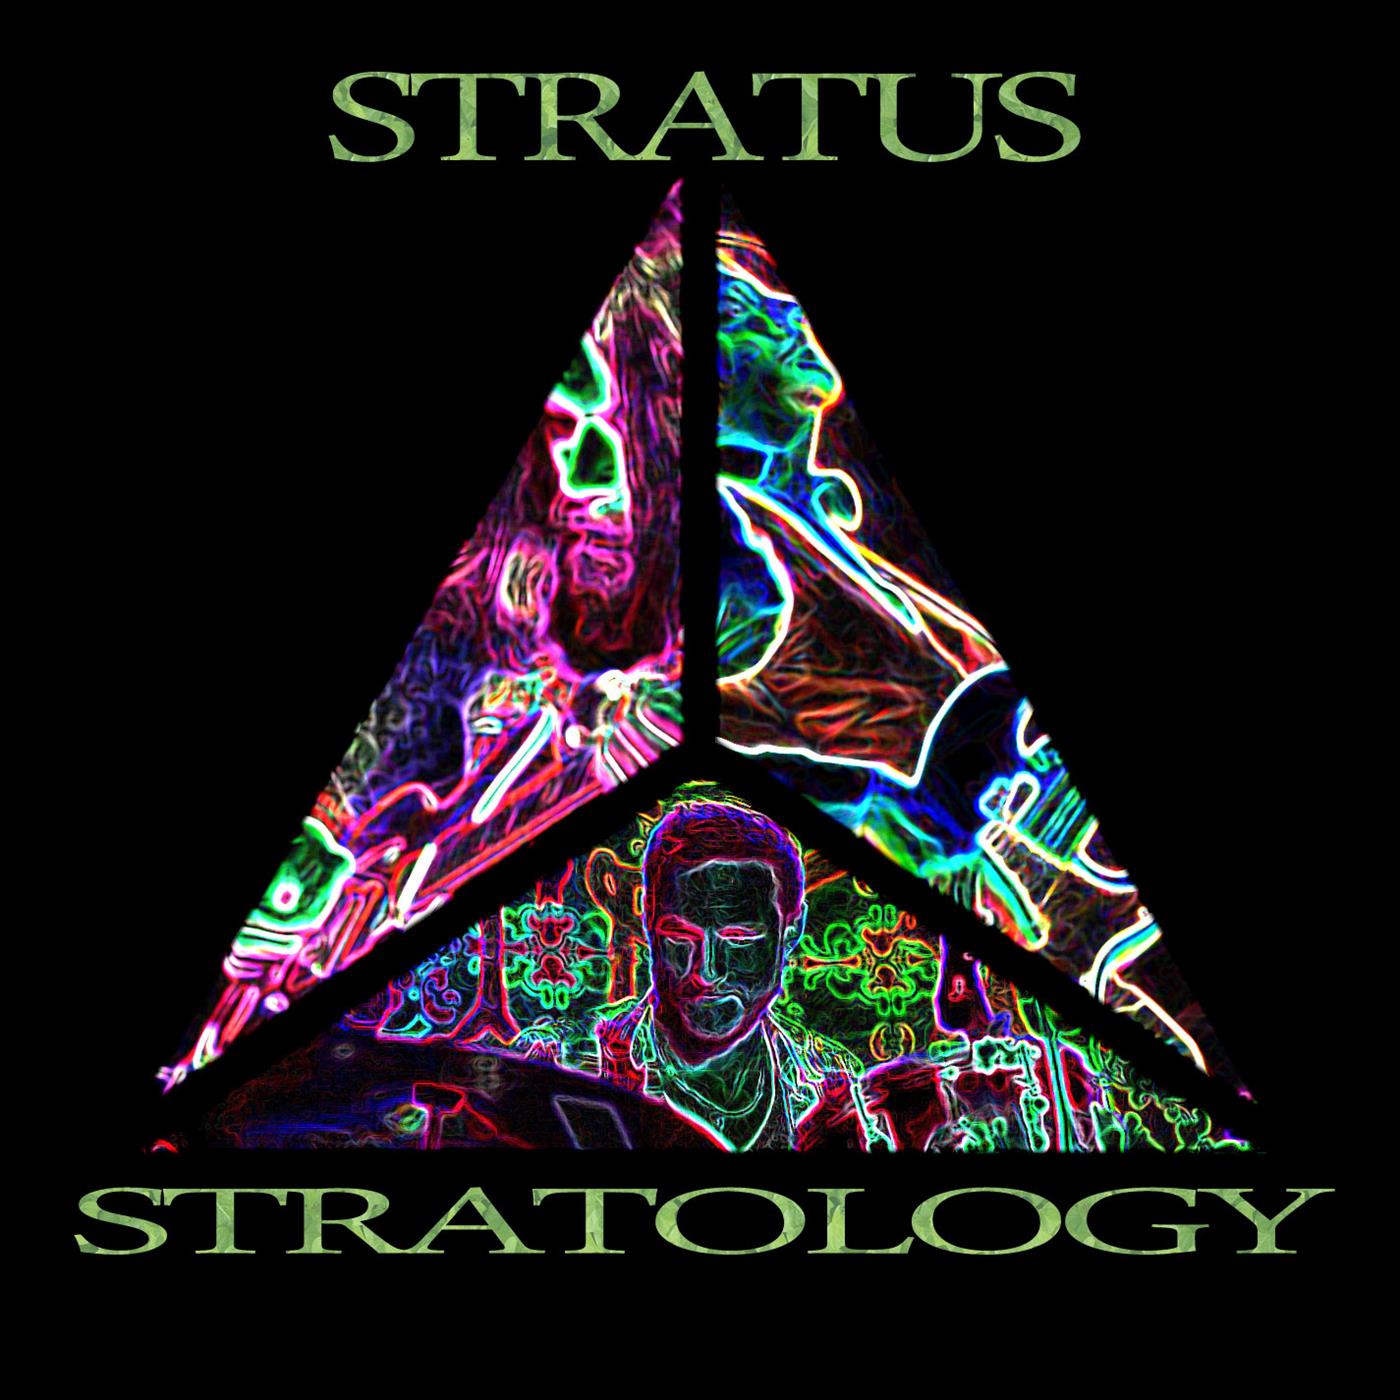 Stratology